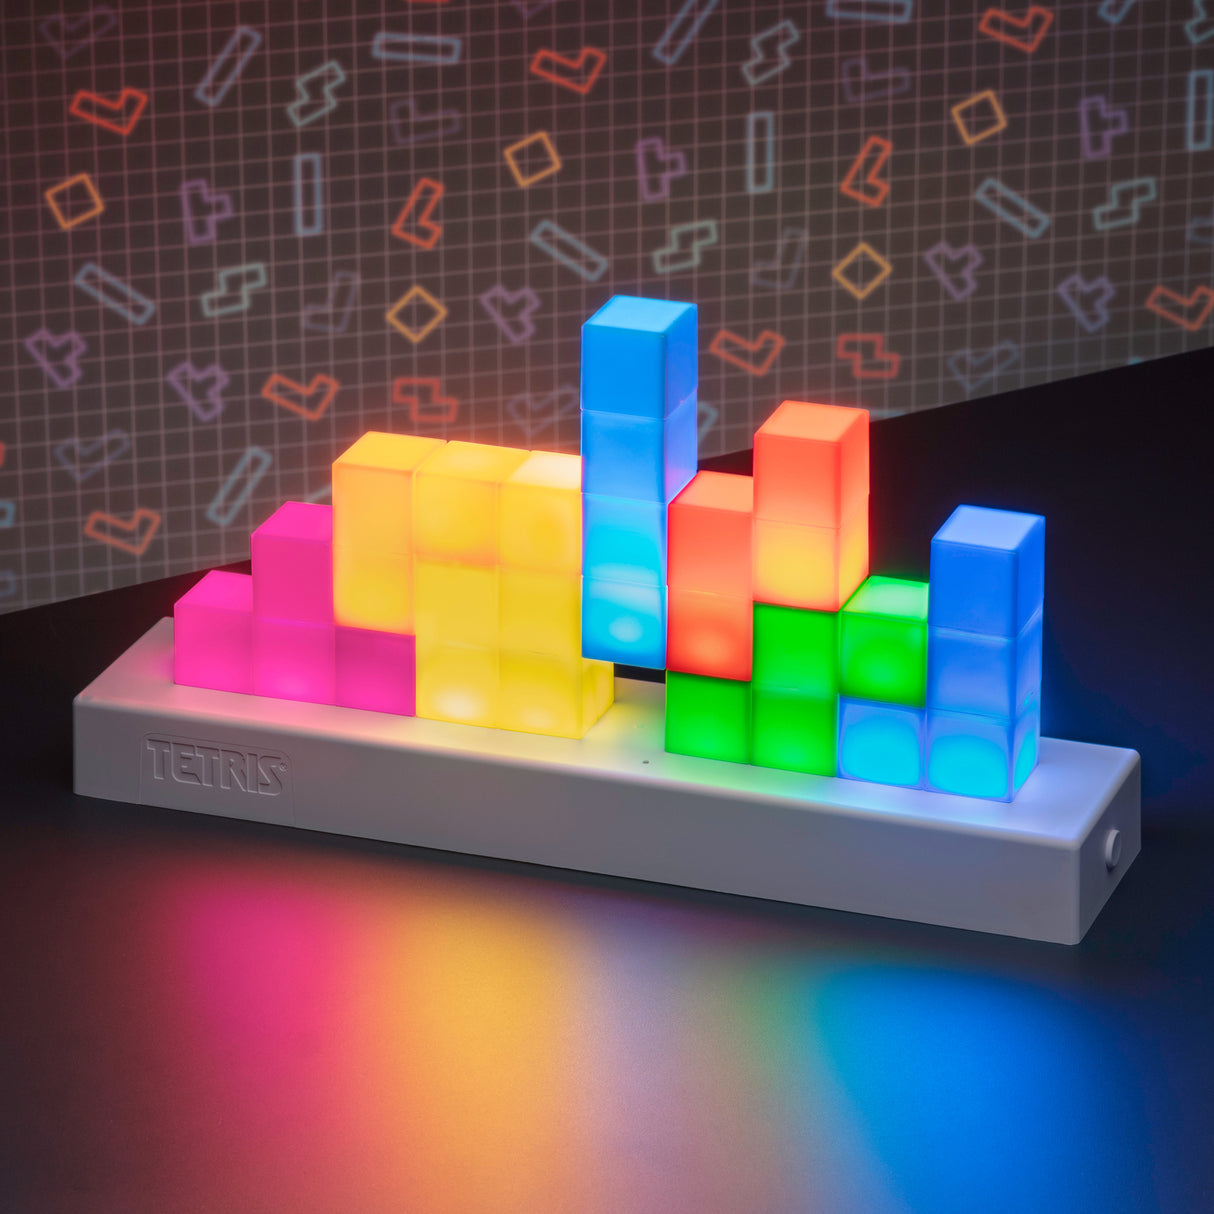 Tetris Dekolampe mit 3 Leuchtmodi